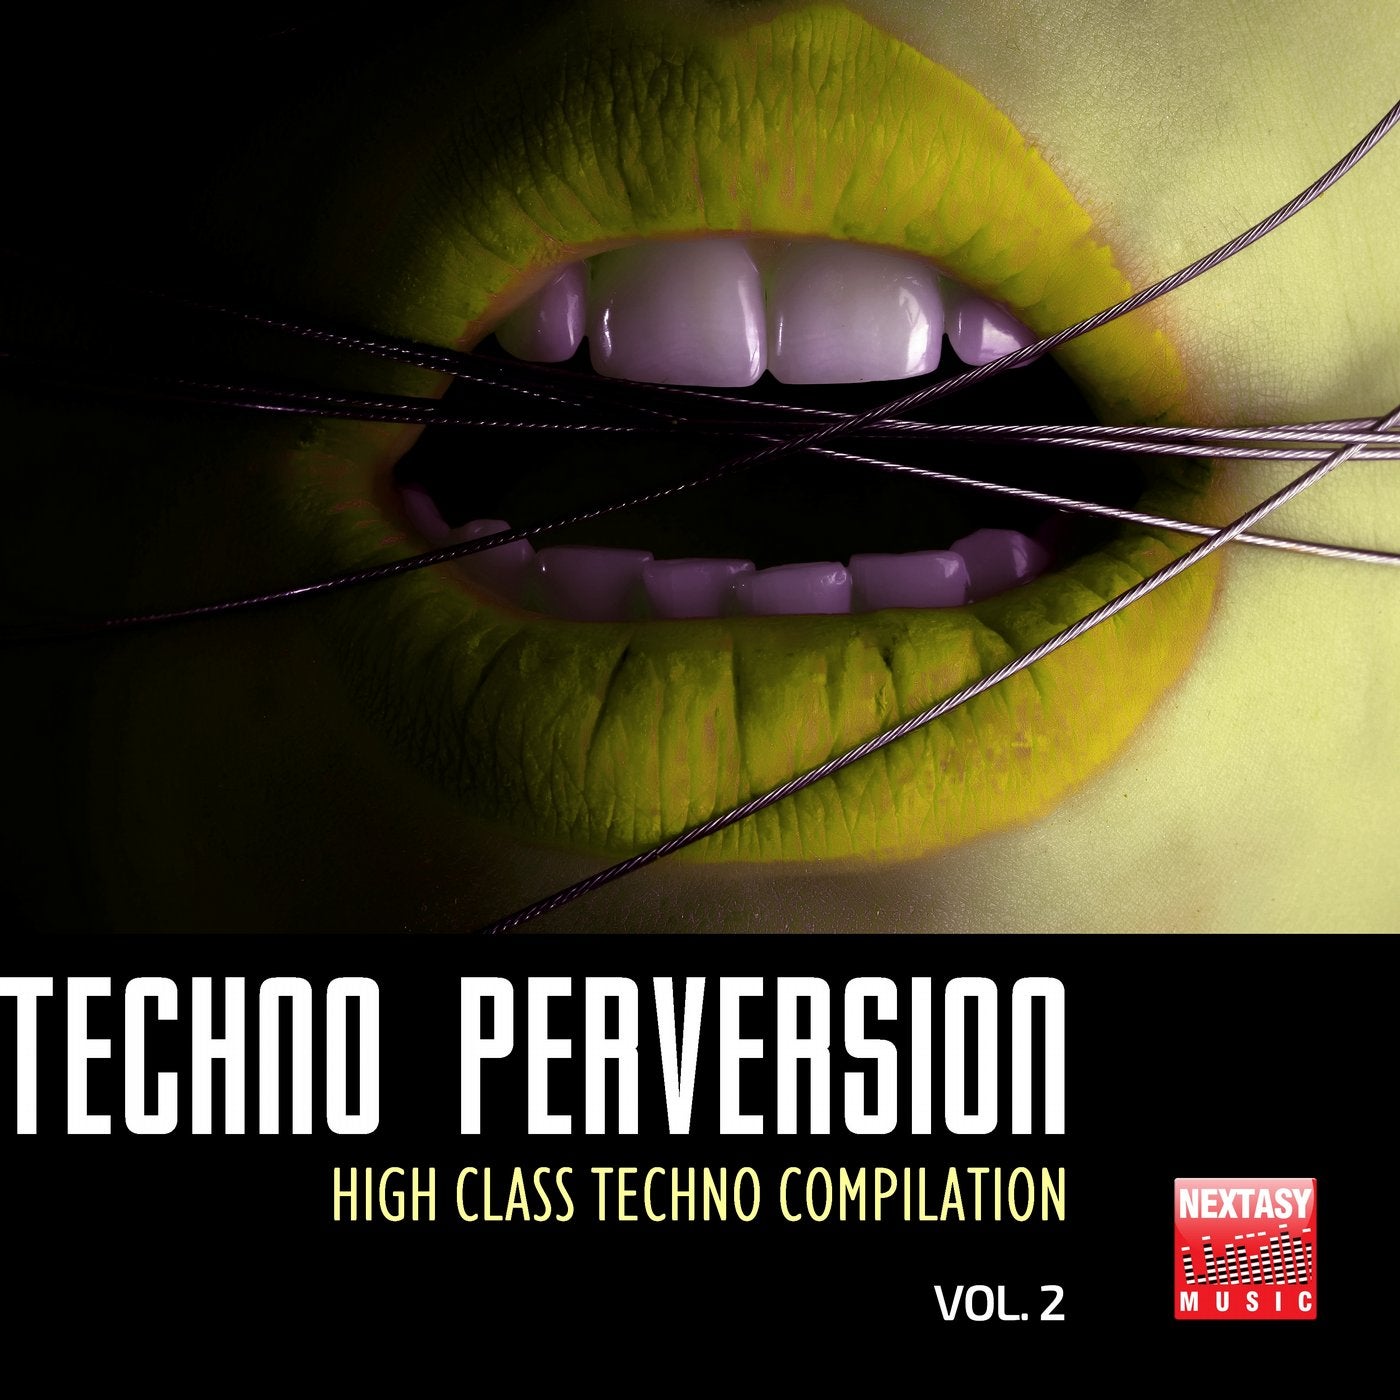 Techno Perversion, Vol. 2 (High Class Techno Compilation)